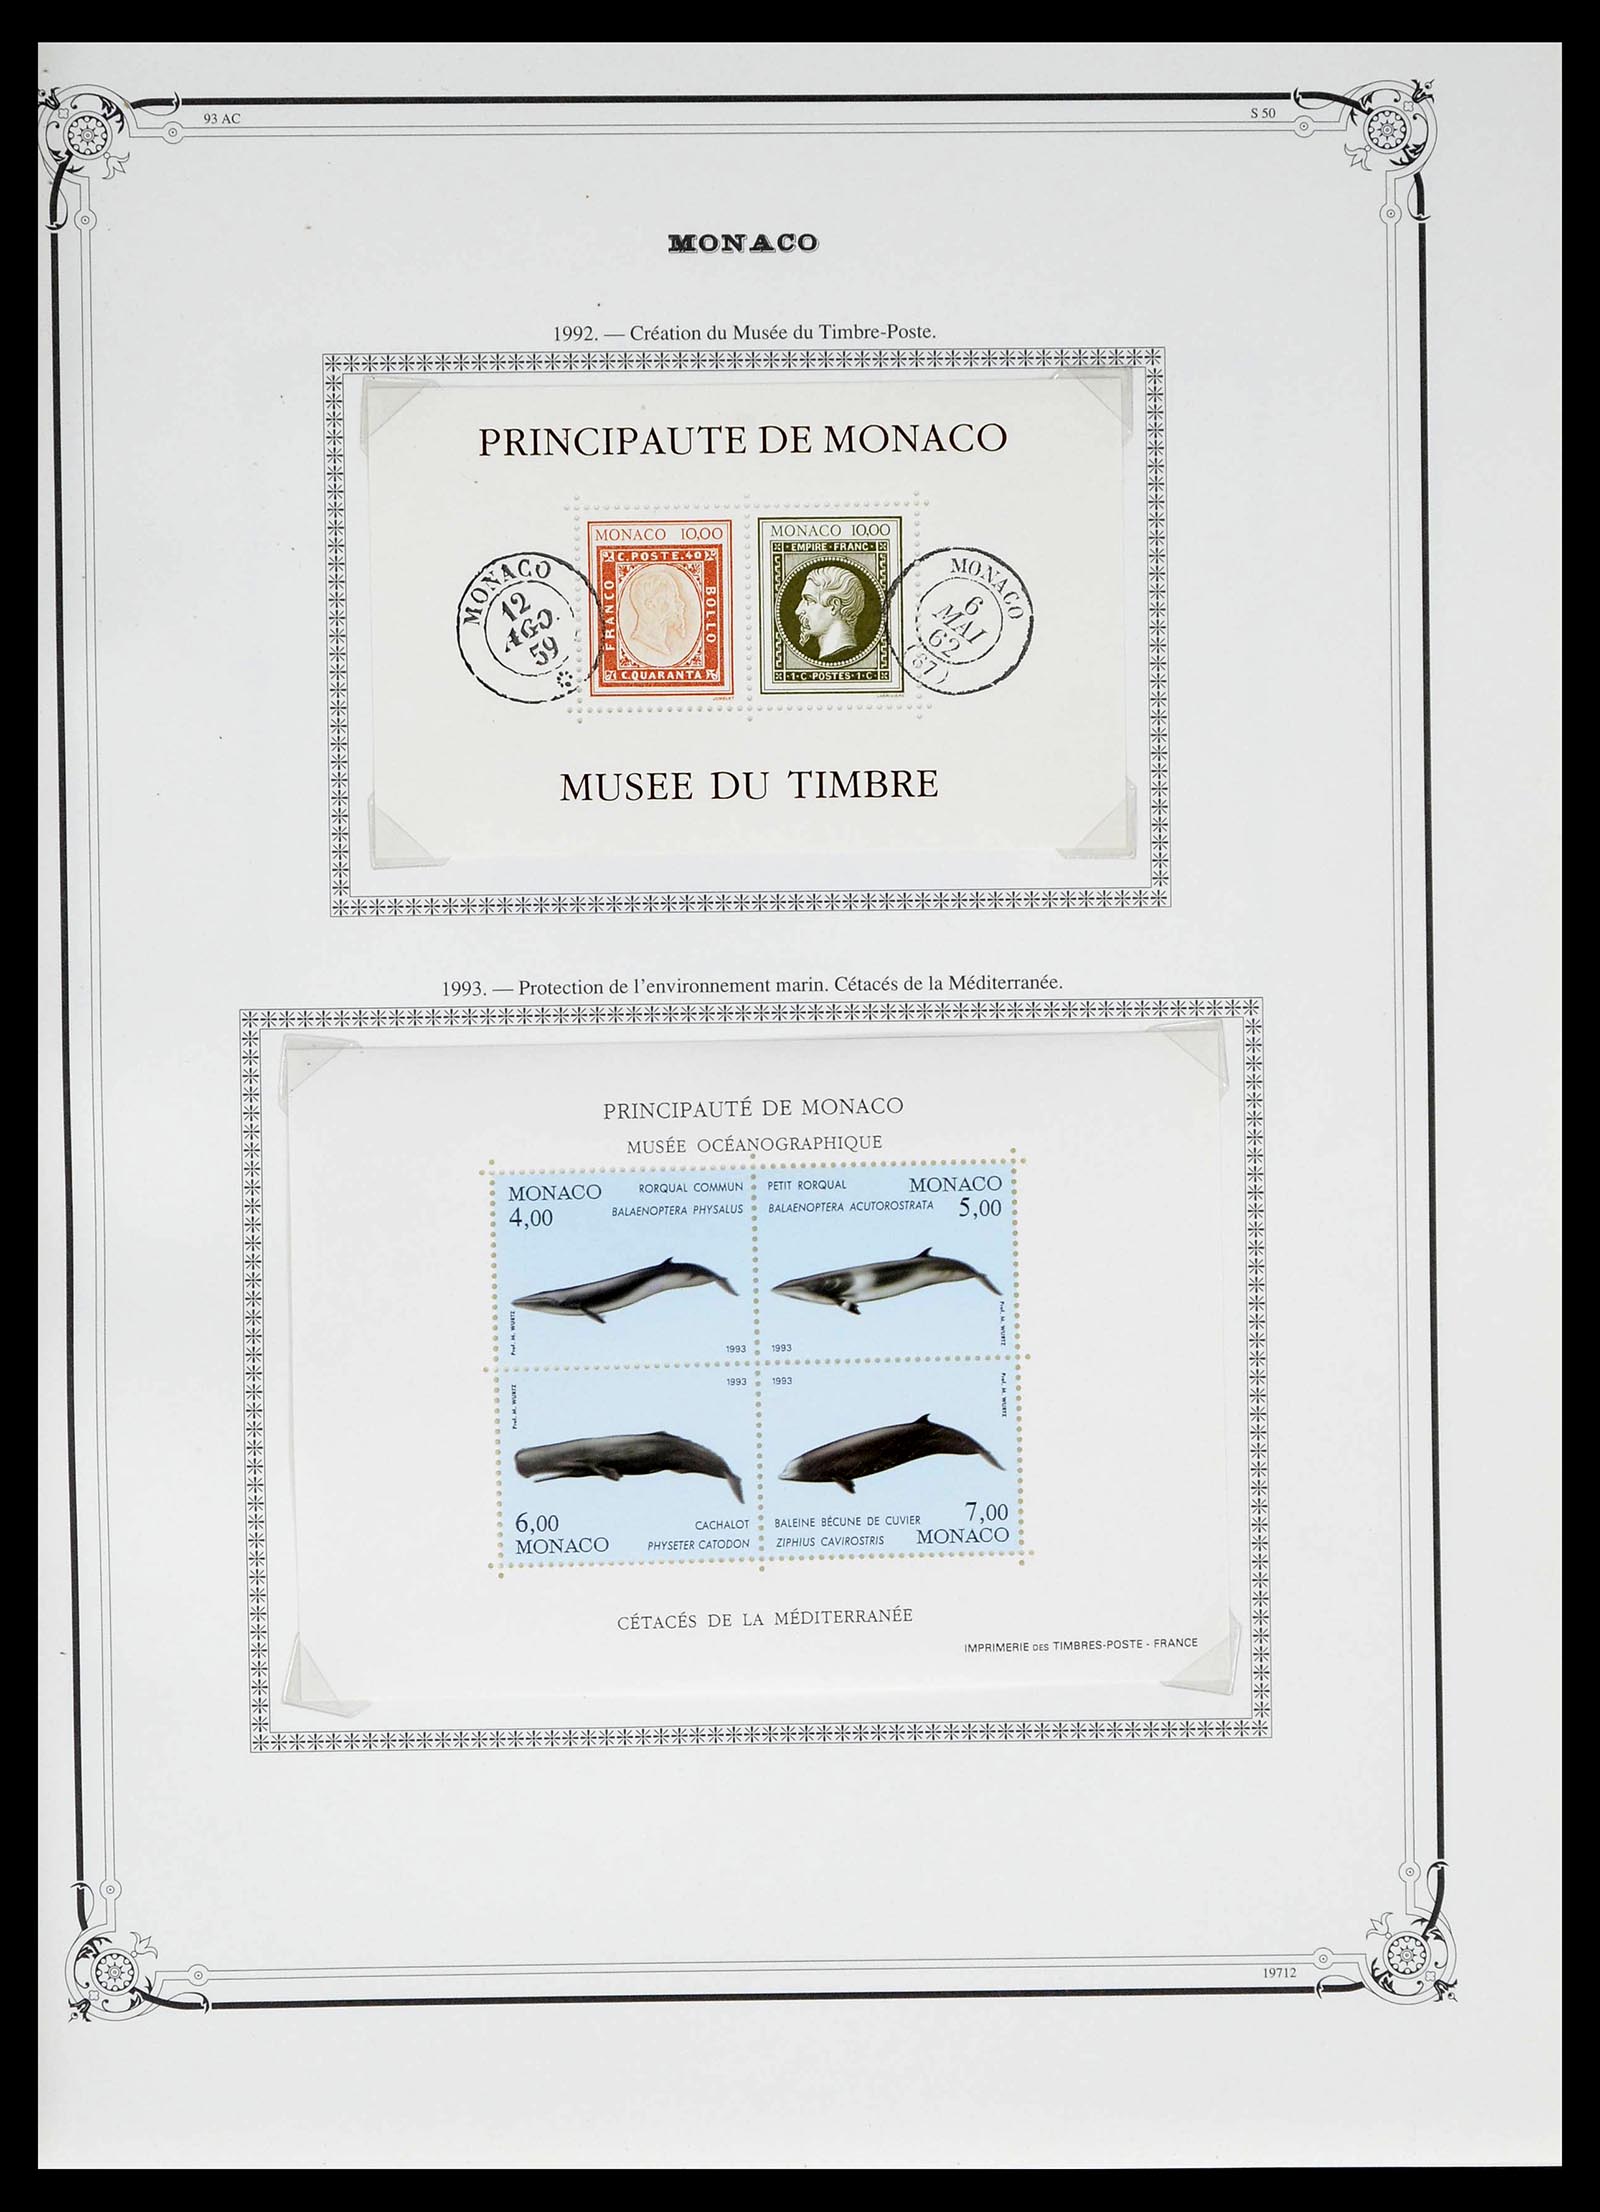 39133 0239 - Stamp collection 39133 Monaco 1885-1996.